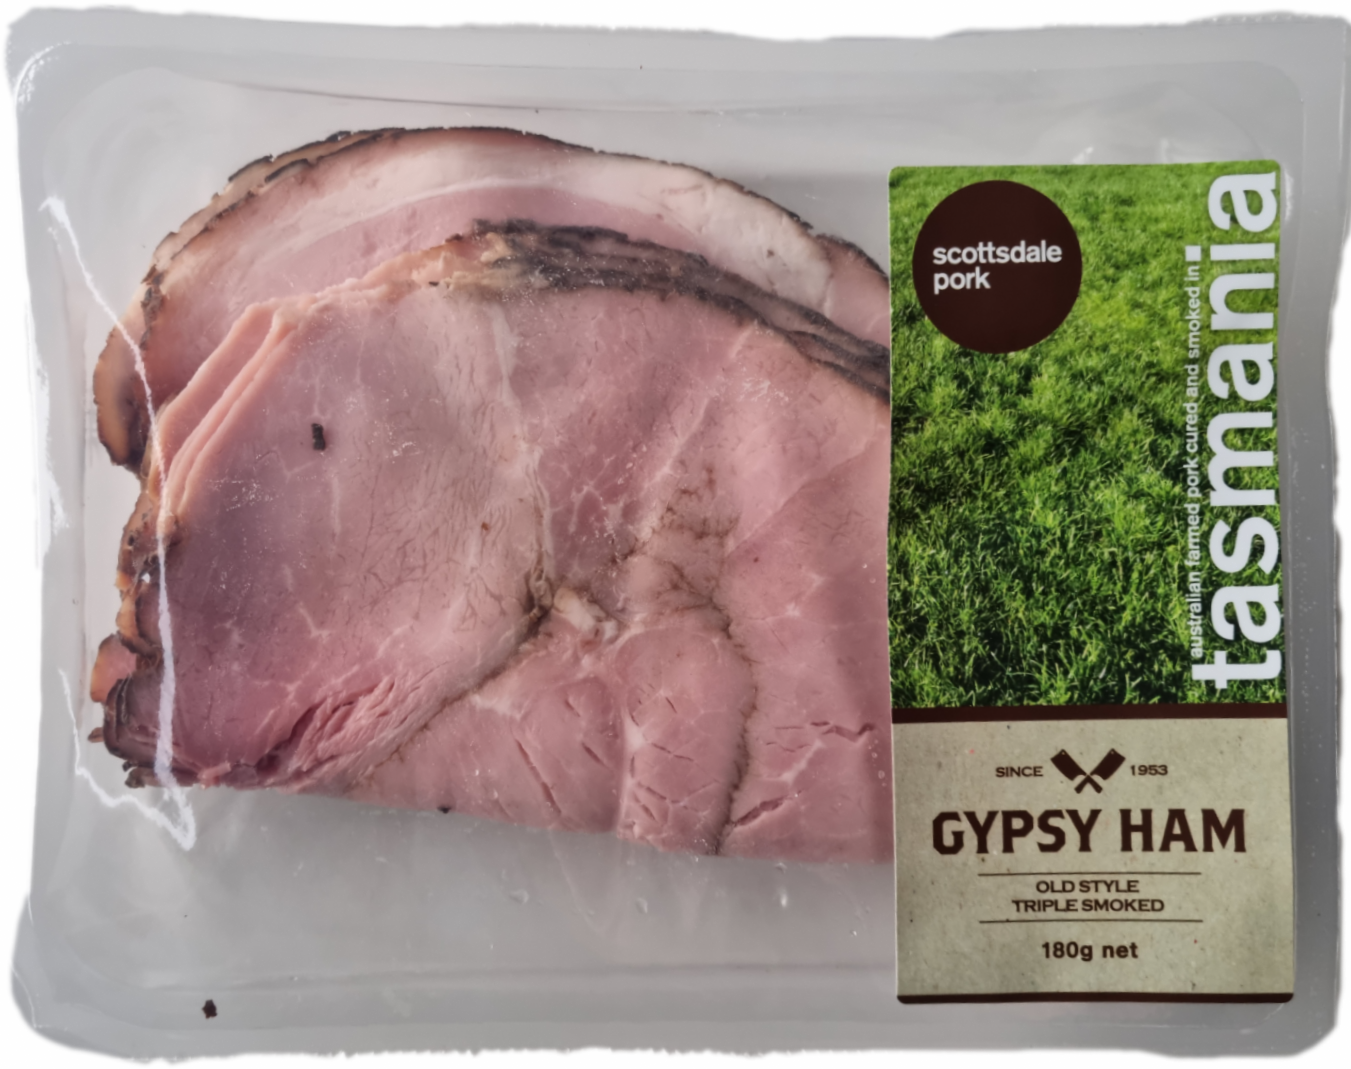 Gypsy ham 180g pack